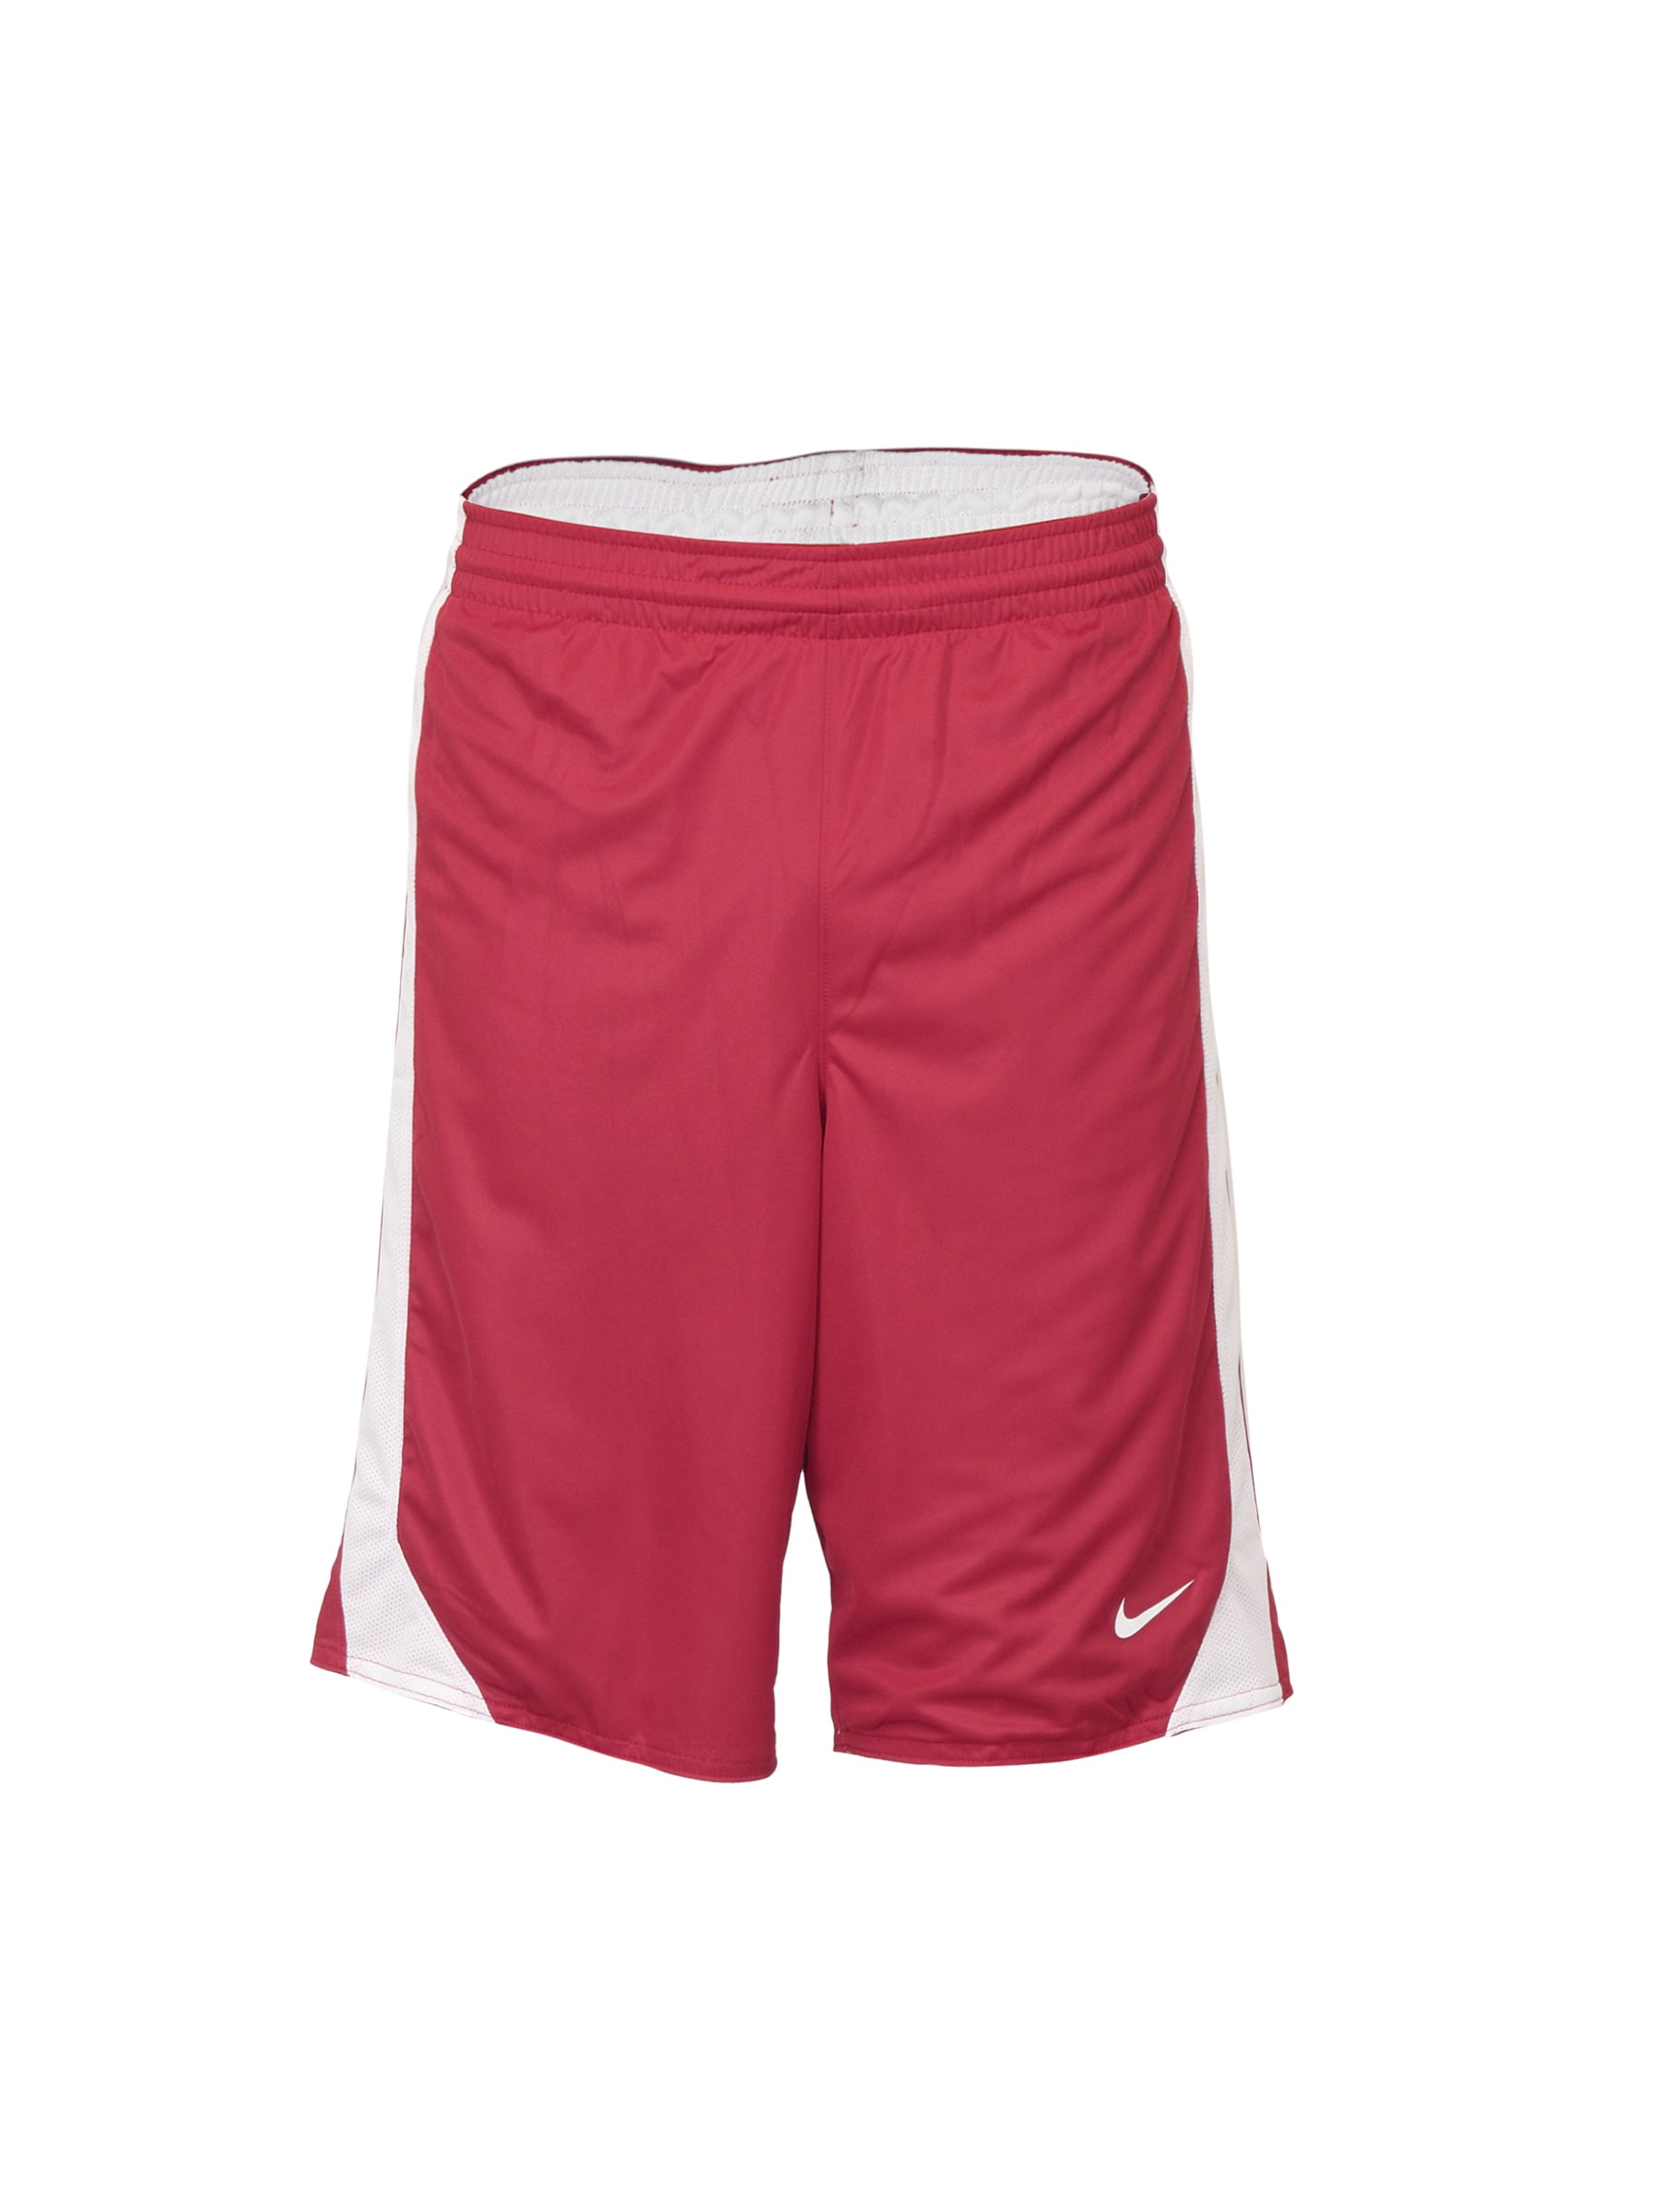 Nike Men Hustle Reversible Red Shorts